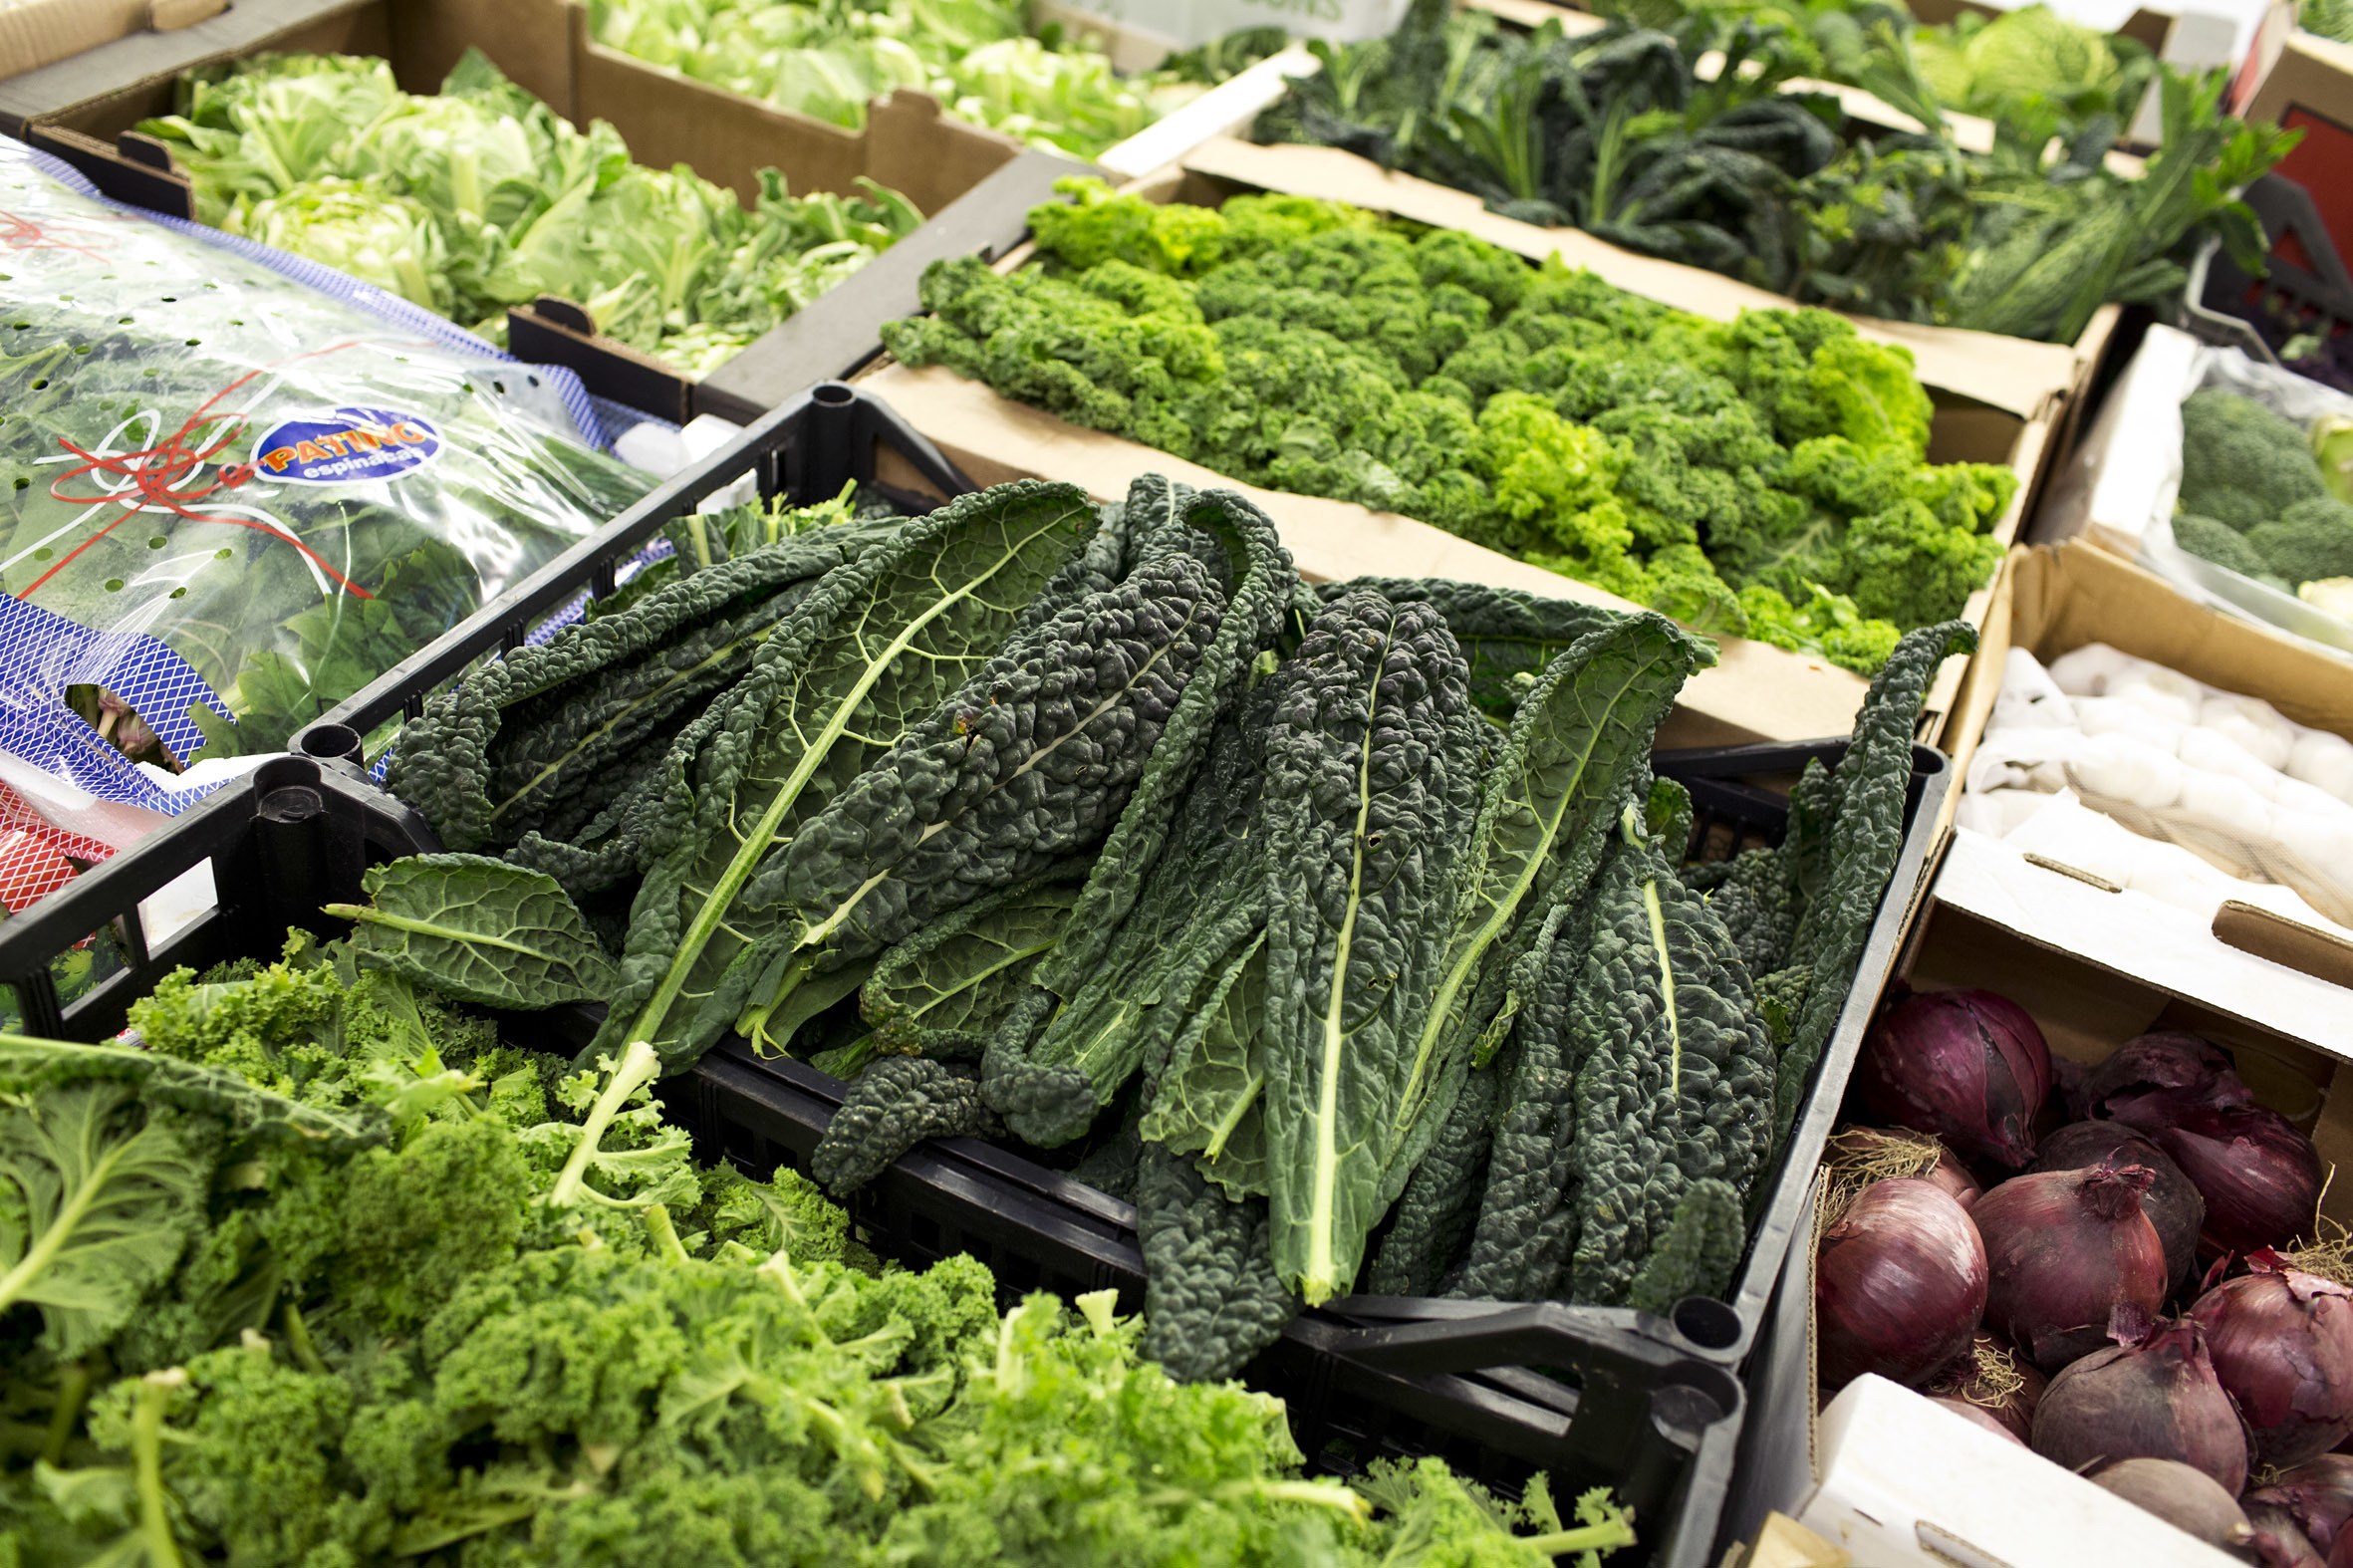 fruit-and-vegetable-market-report-march-2014-kale.jpg?mtime=20170922112634#asset:11327